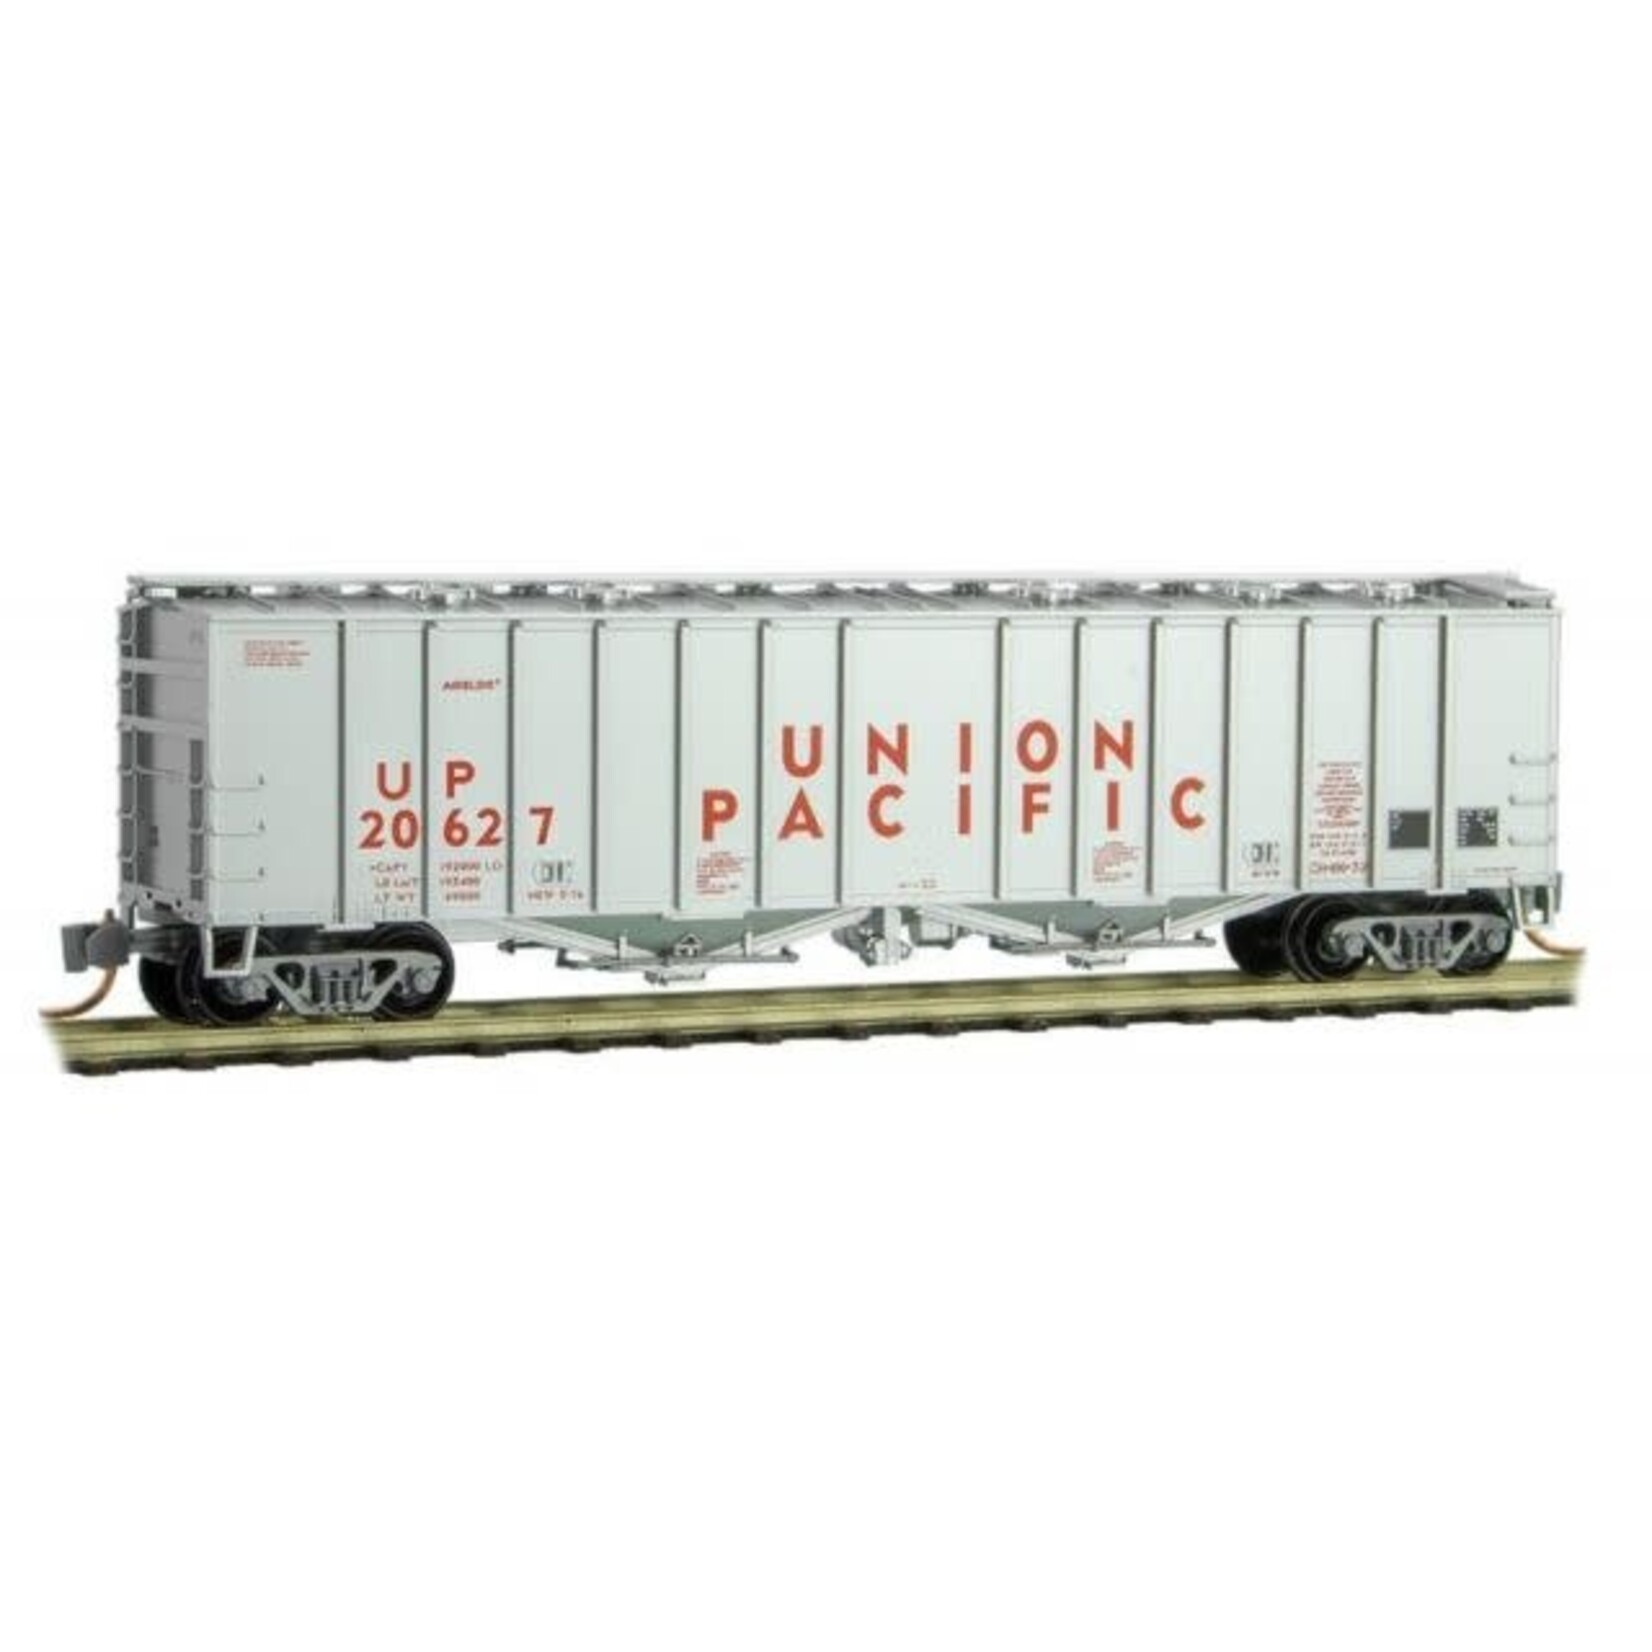 Micro Trains Line 09800052 N Union Pacific - Rd20627